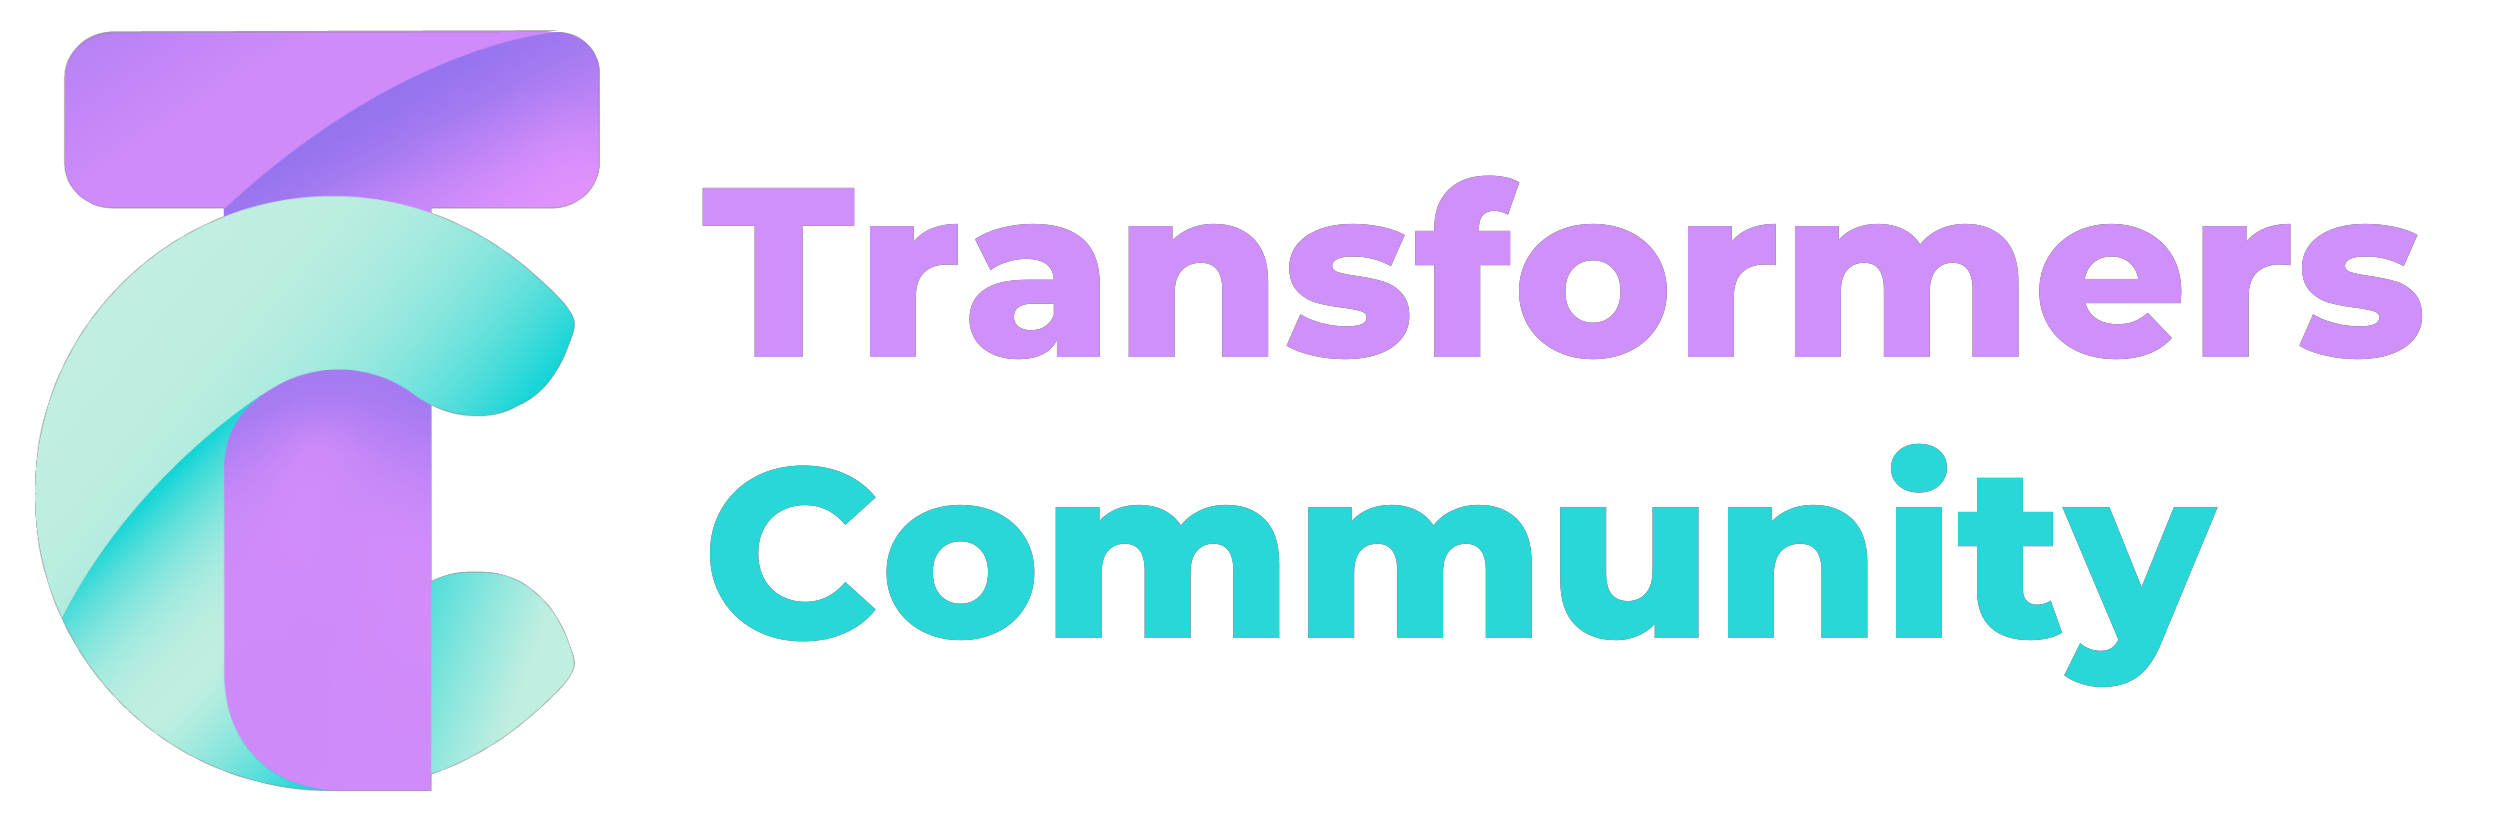 Transformer Community